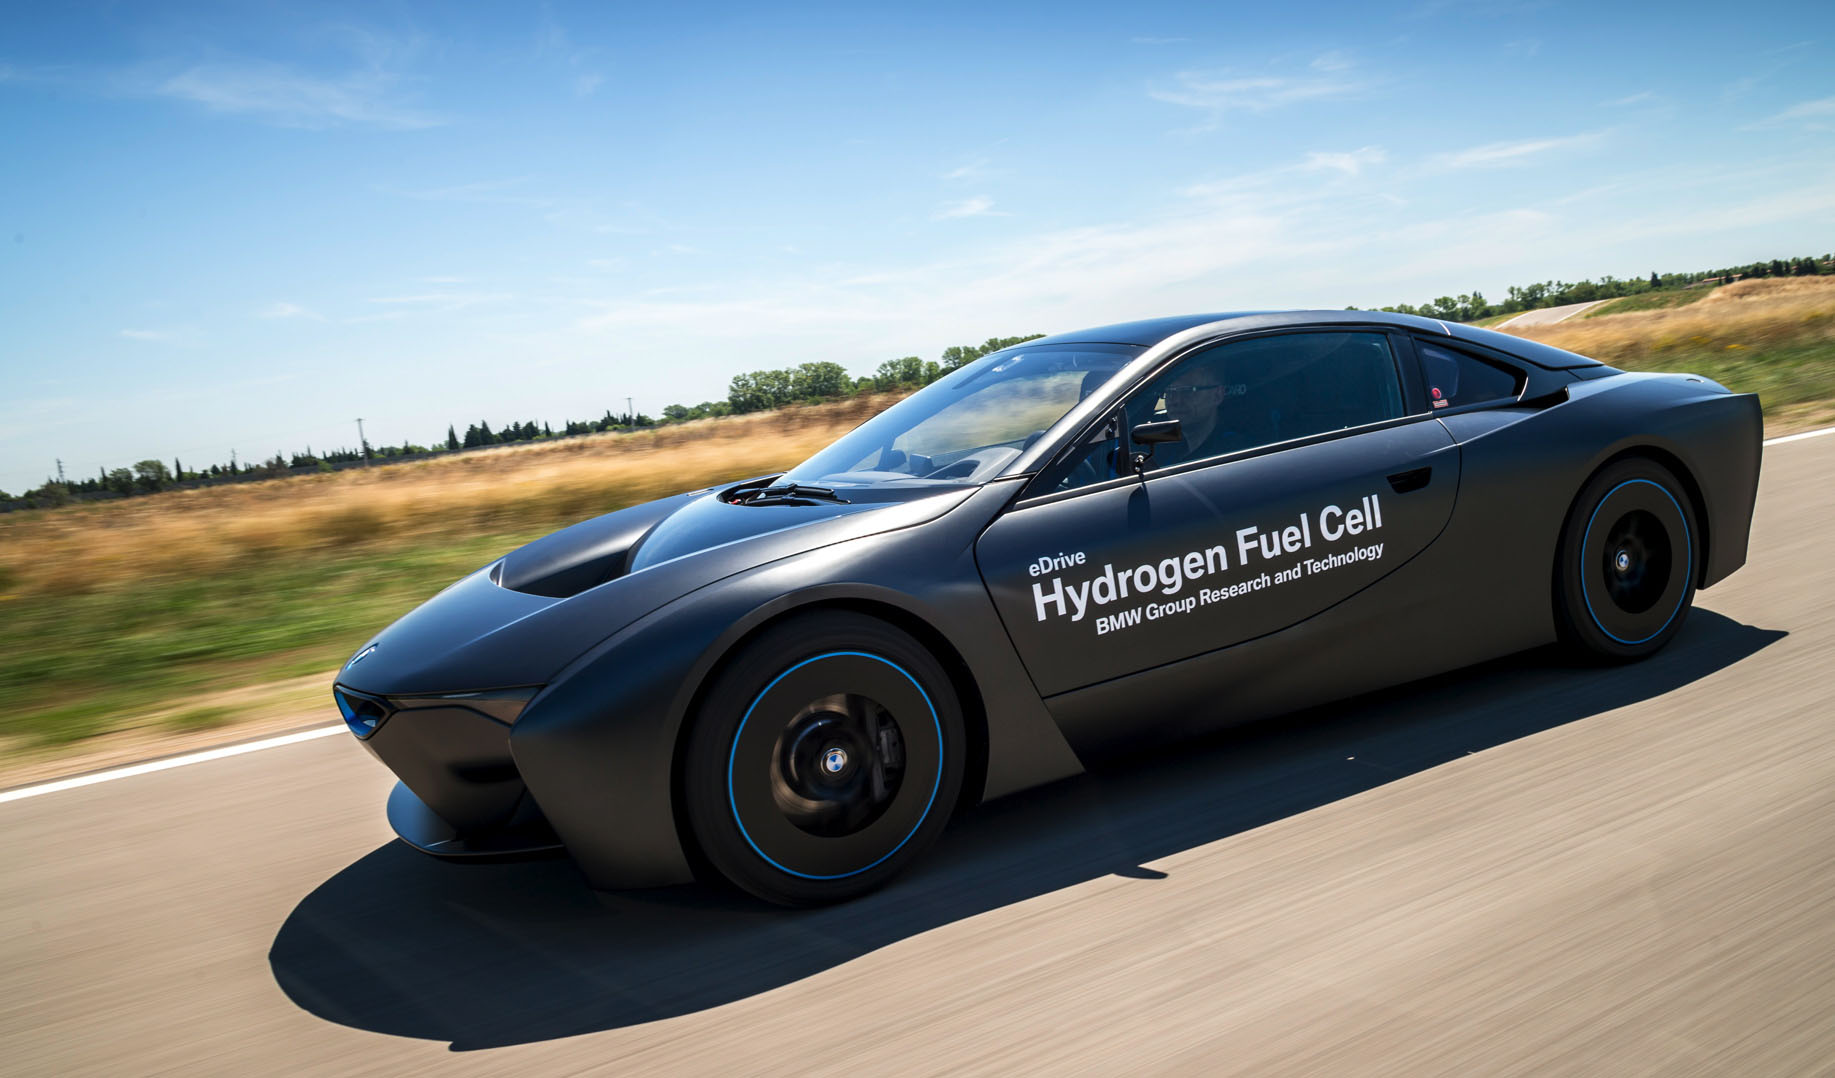 BMW-i8-hydrogen-fuel-cell-images-01 (1)